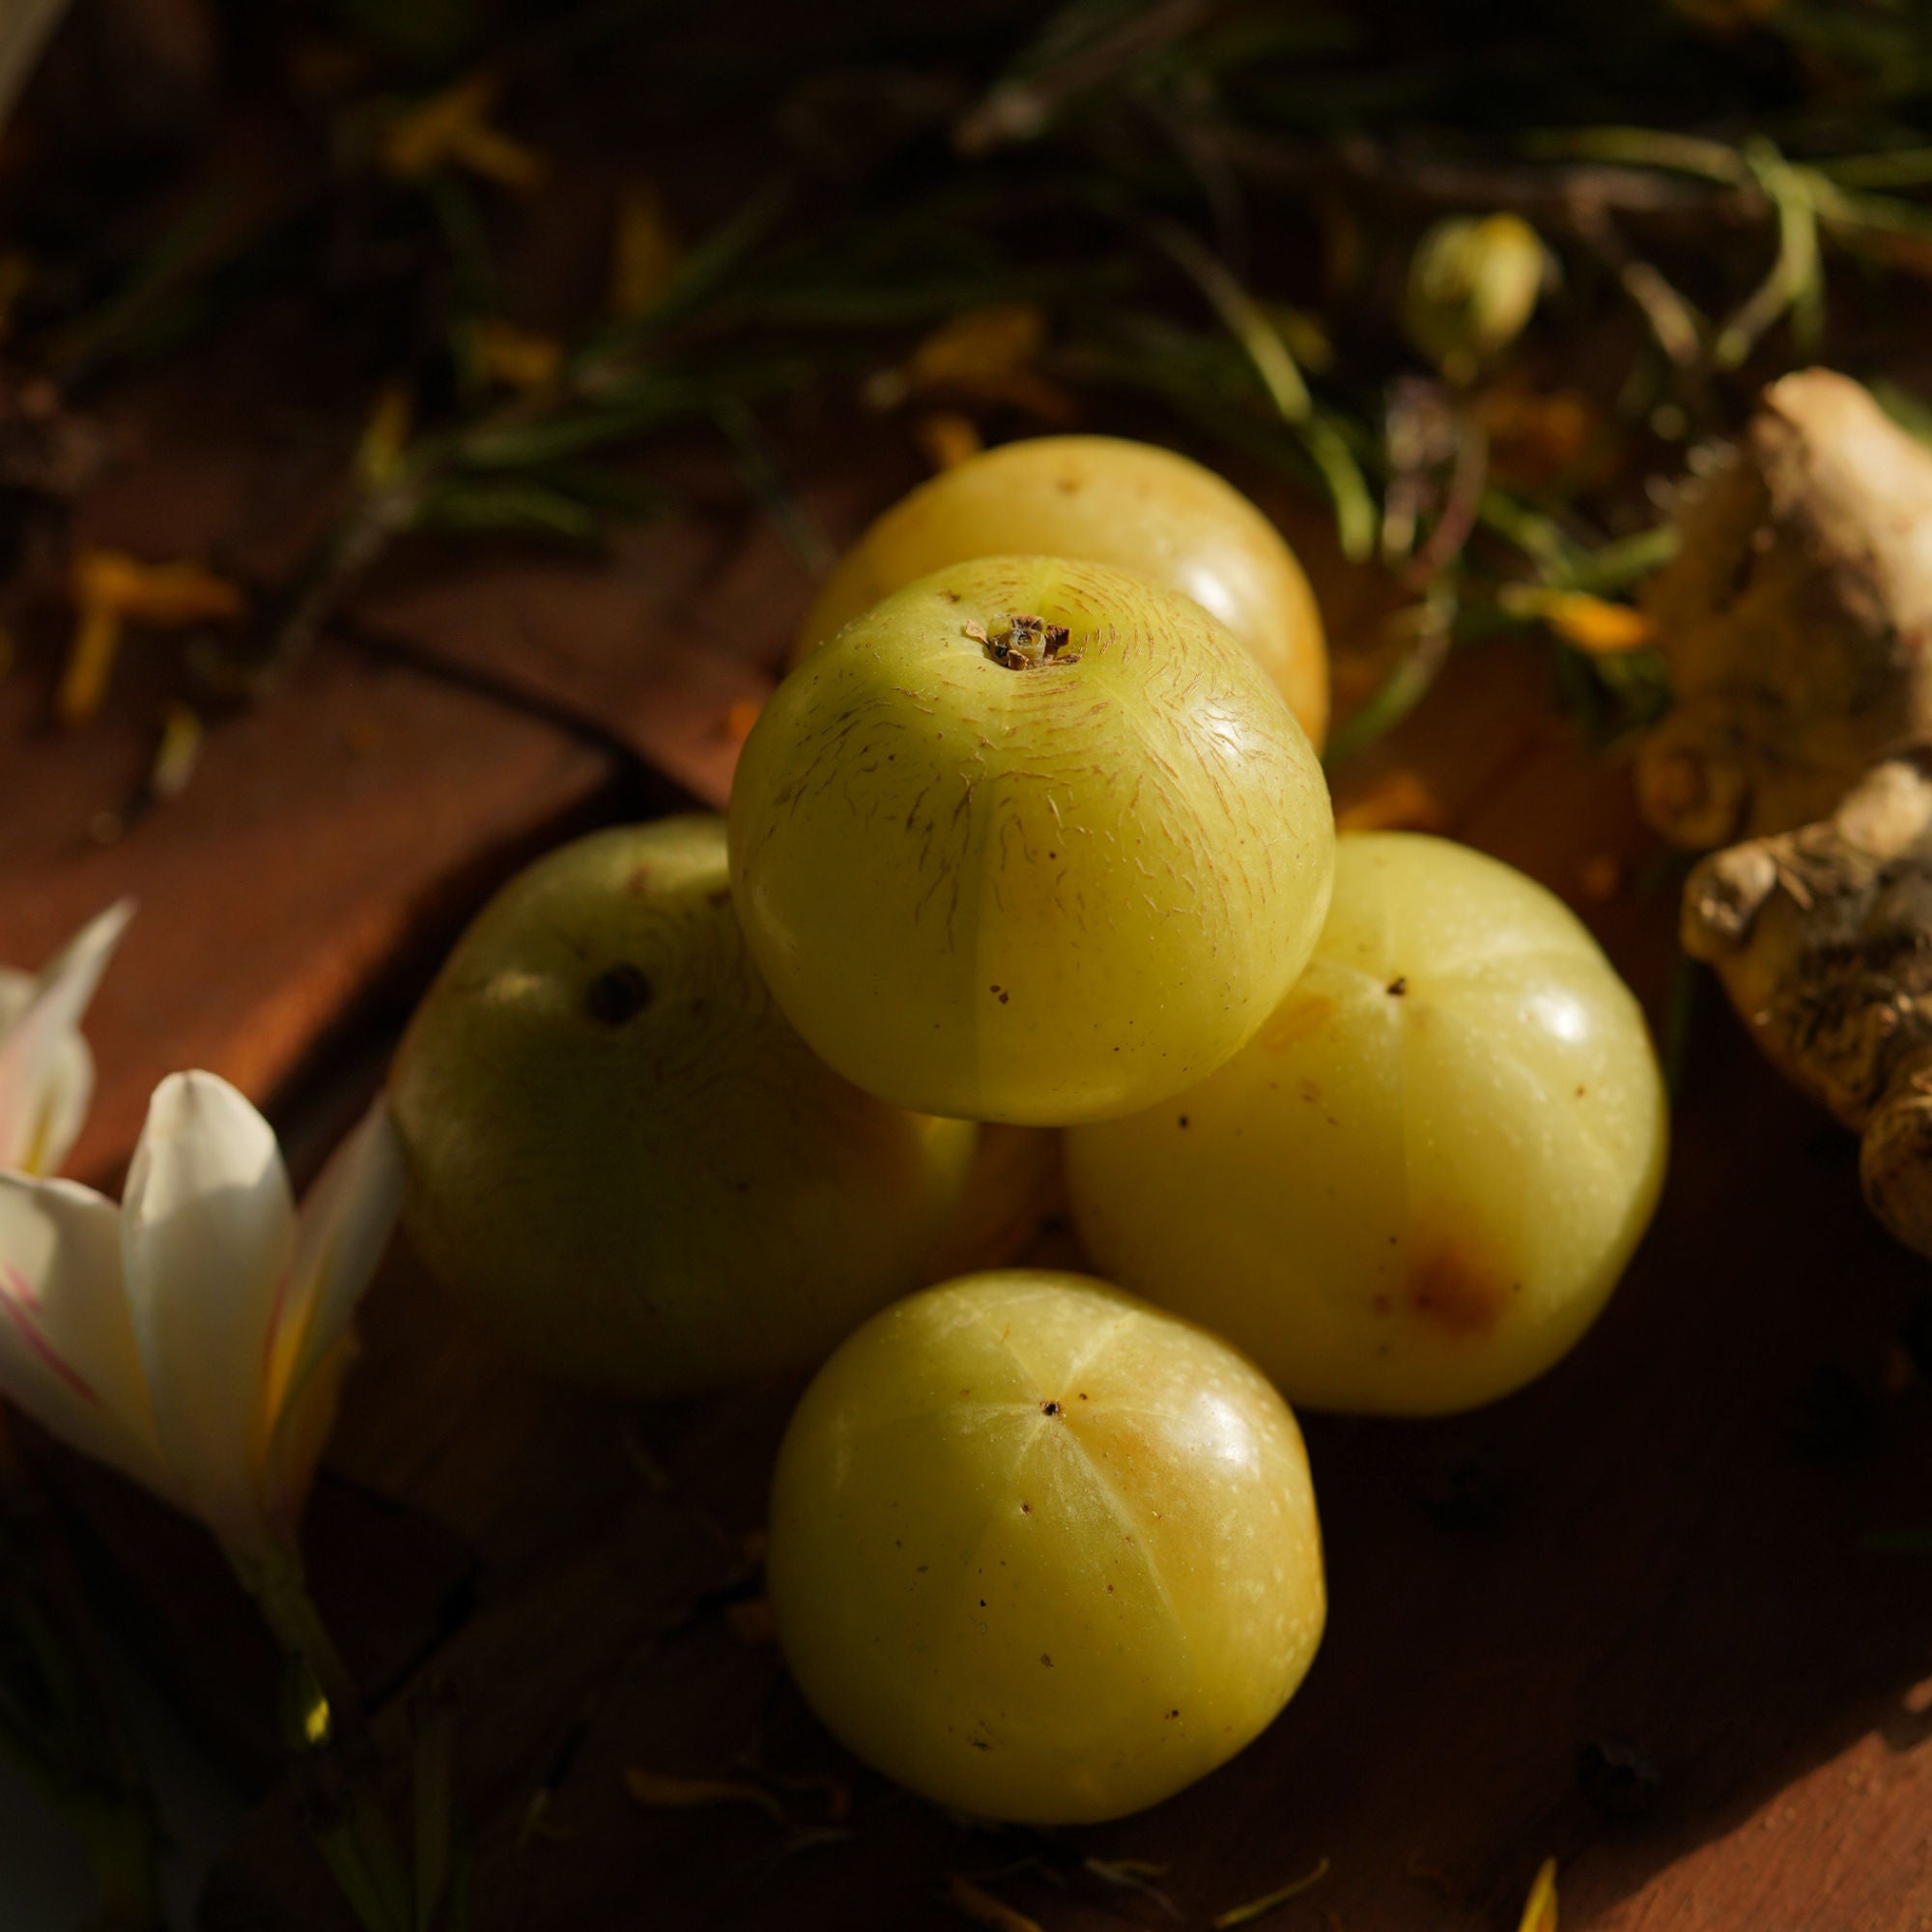 Herbal Eve ~ Natural Tea with Cinnamon, Clove & Liquorice